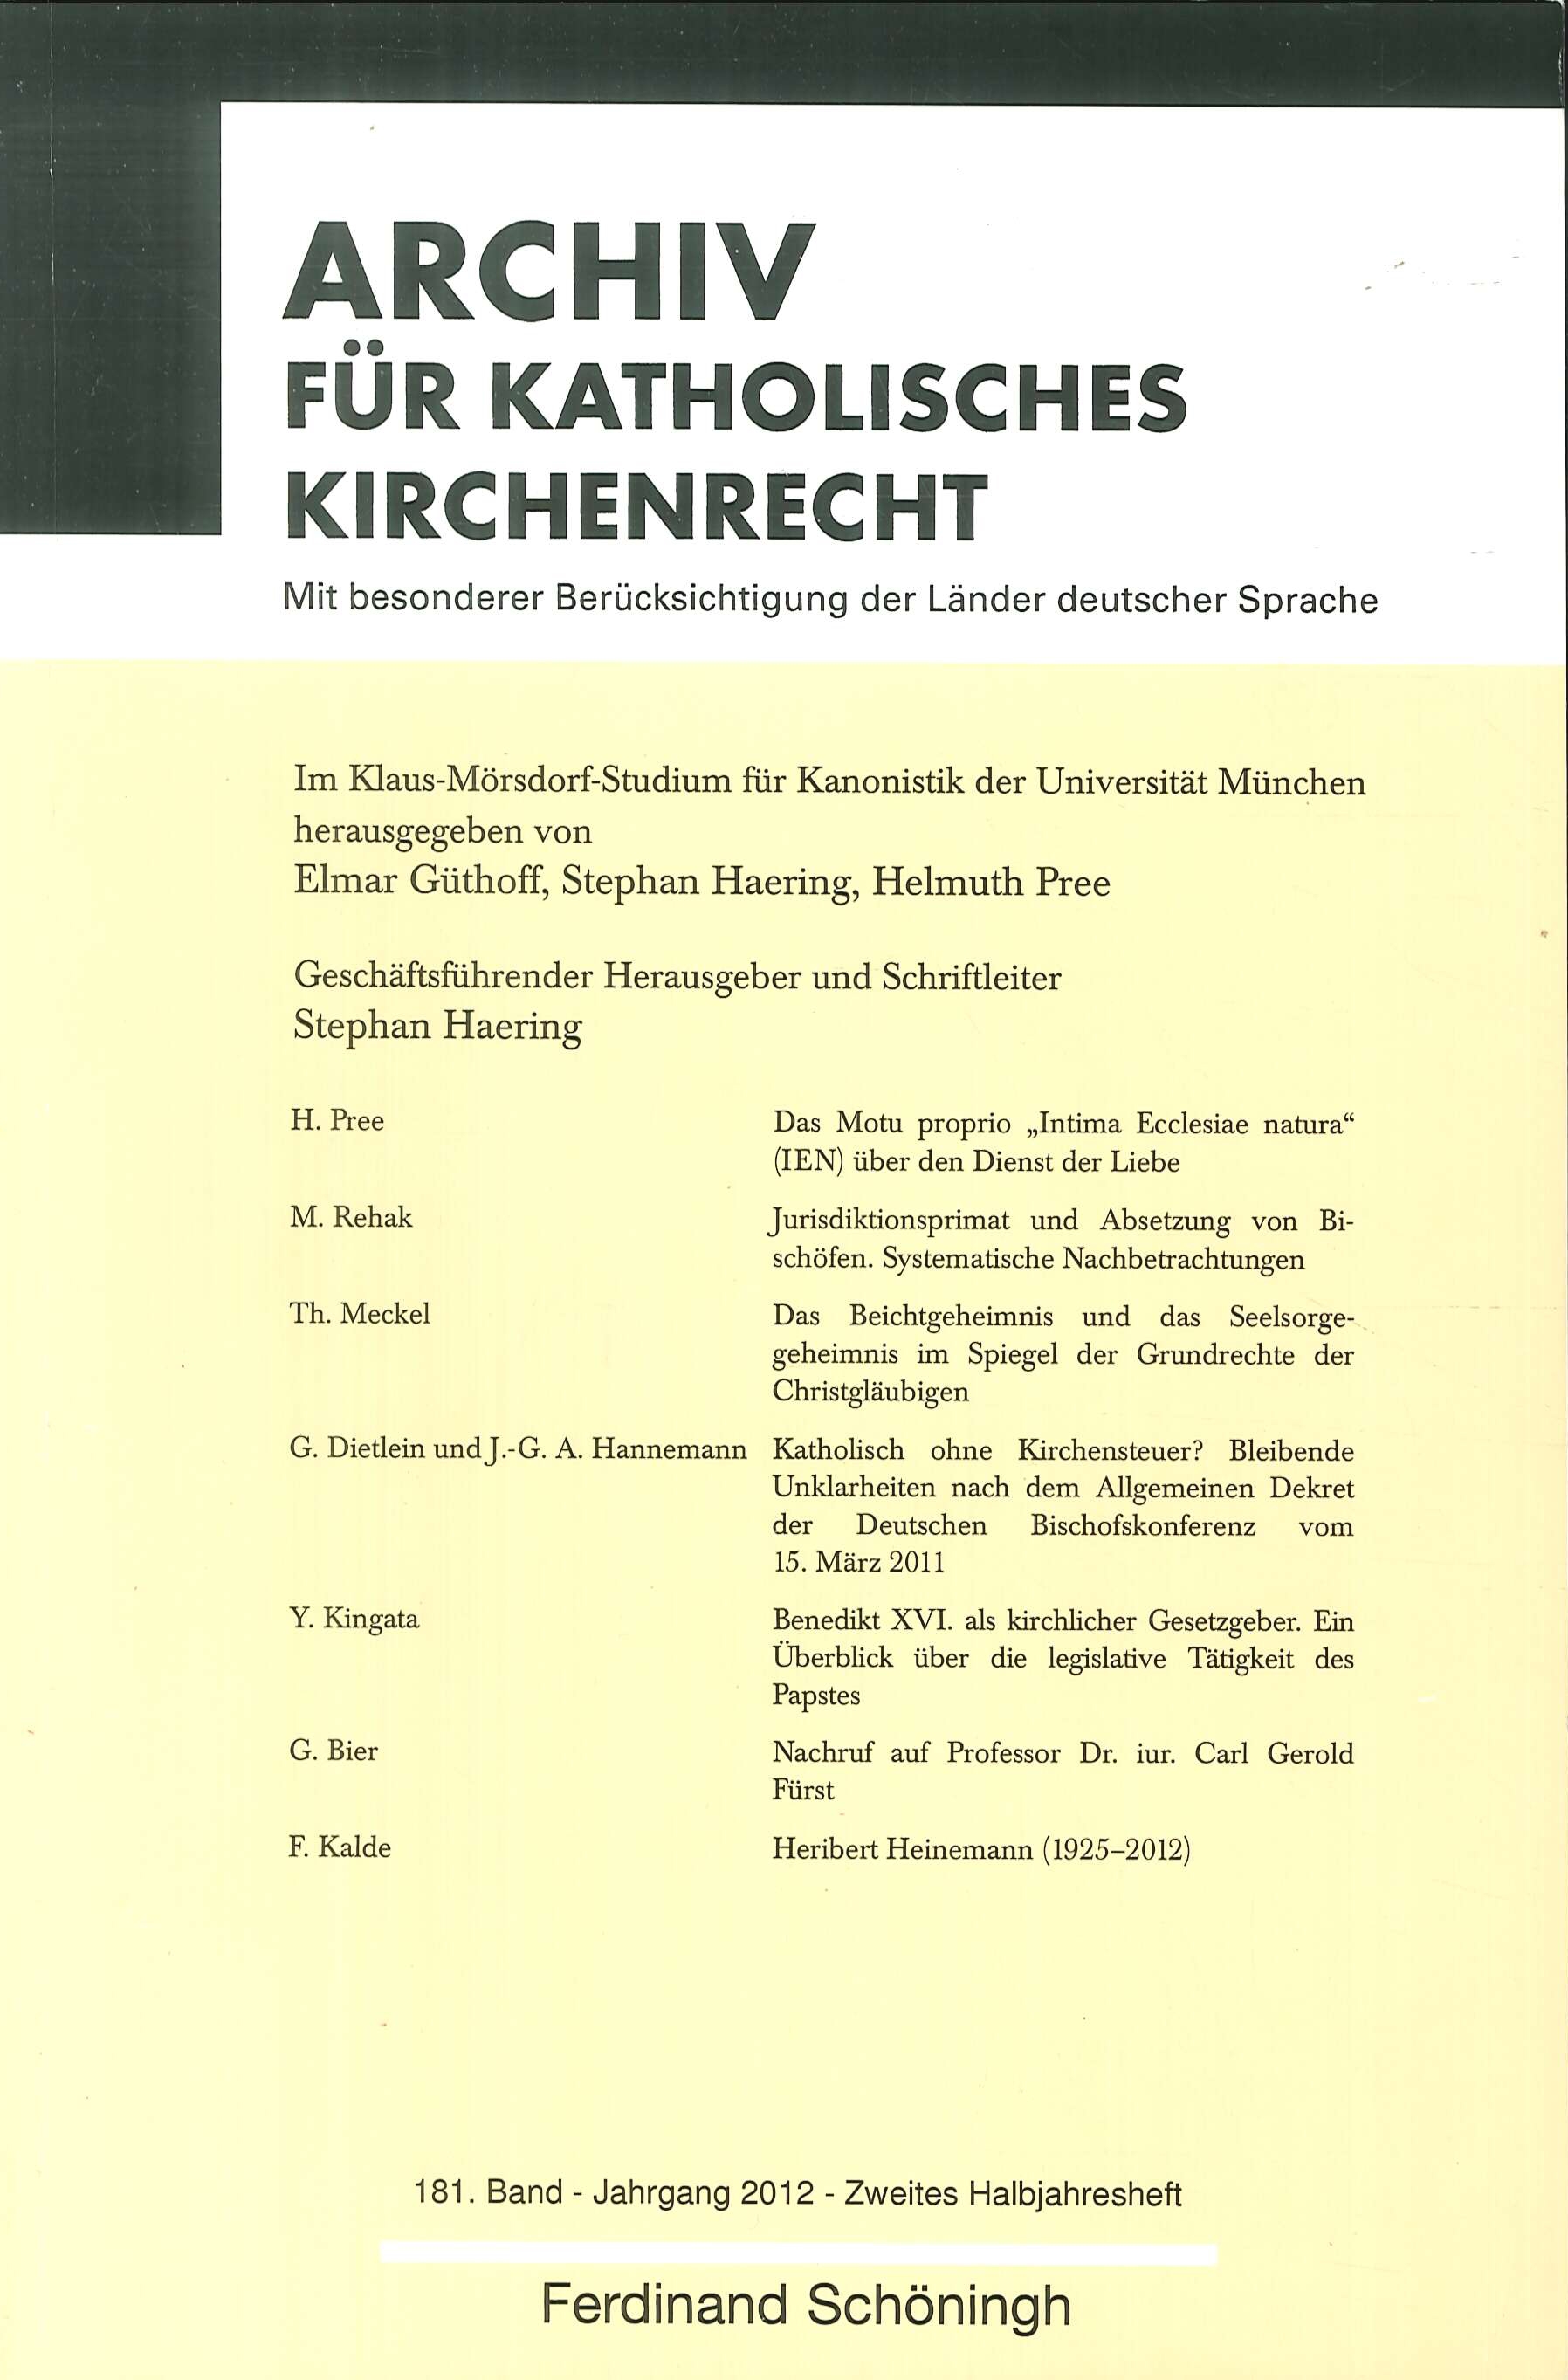 Archiv fuer katholisches Kirchenrecht 181. Jahrgang 2012 Heft 2